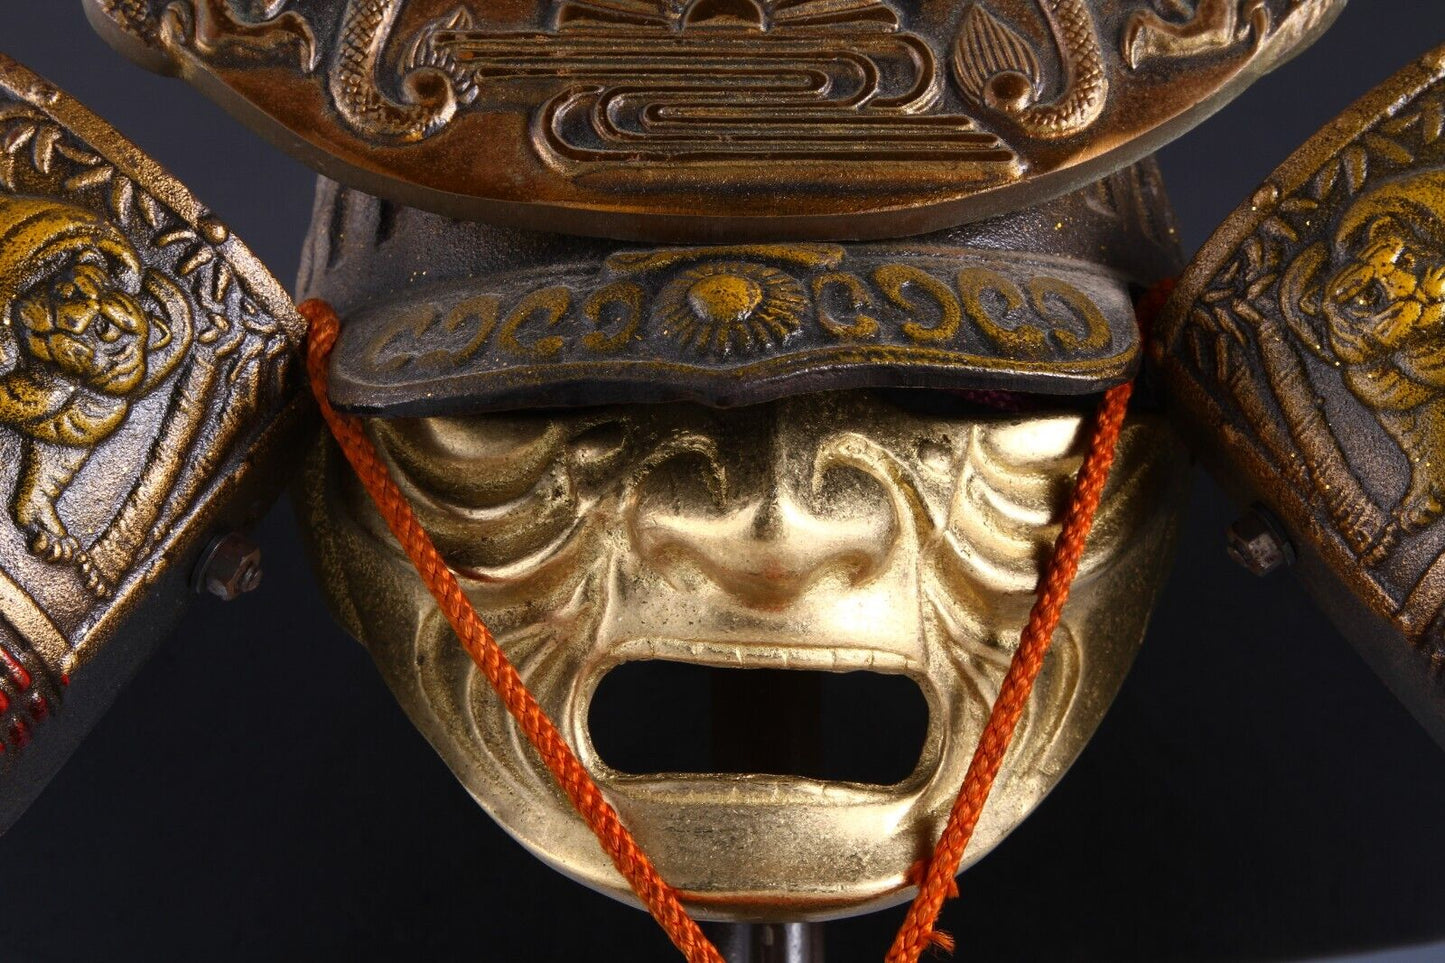 Old Samurai Japan Metal Kabuto Helmet - Dragon Helmet with a Mask